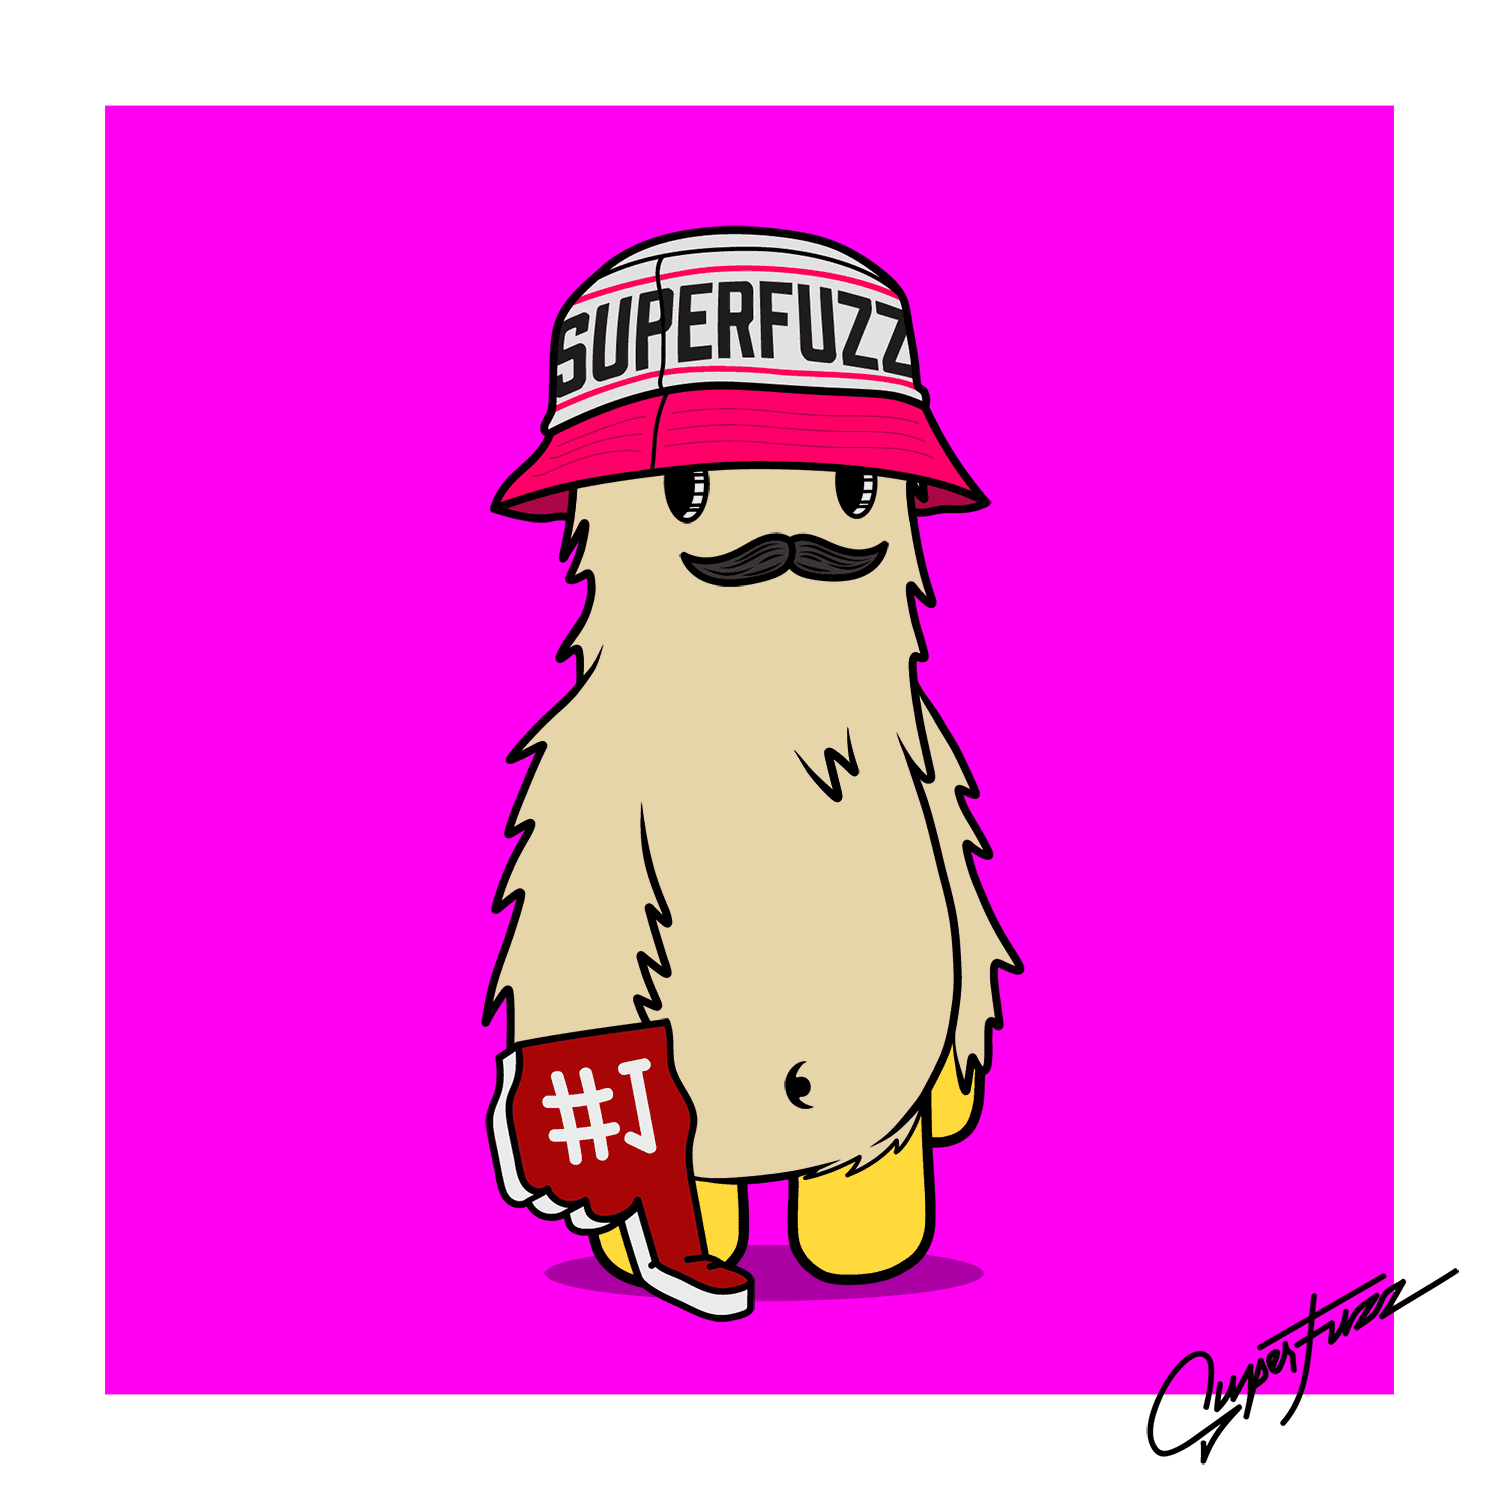 Superfuzz: The Good Guys #6292